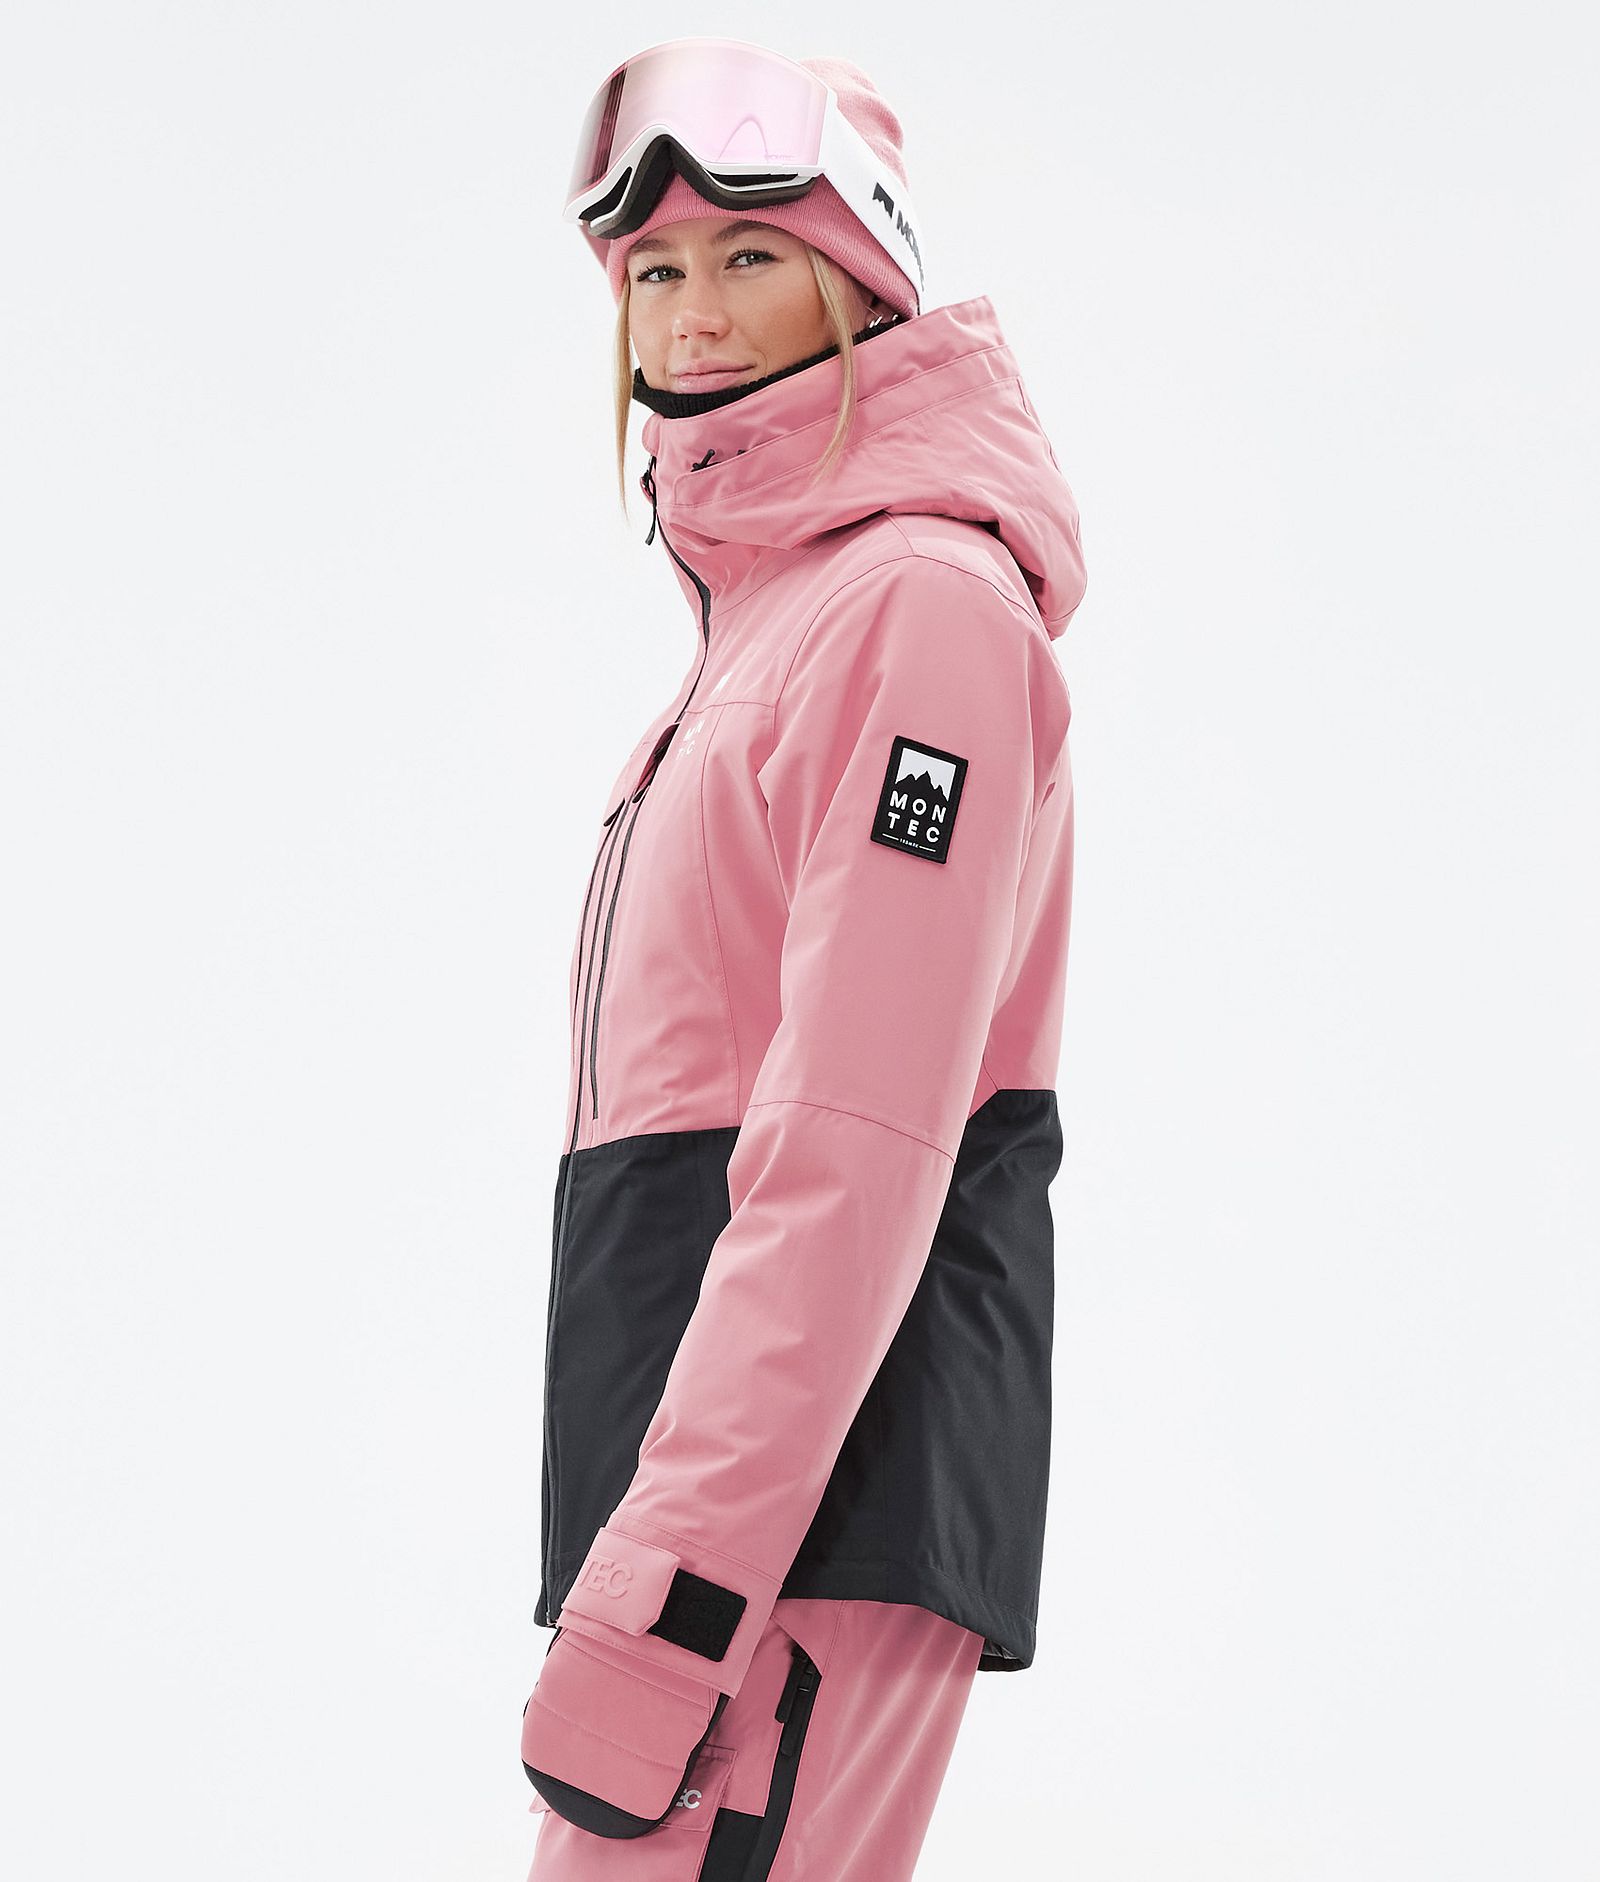 Moss W Snowboard Jacket Women Pink/Black, Image 6 of 10